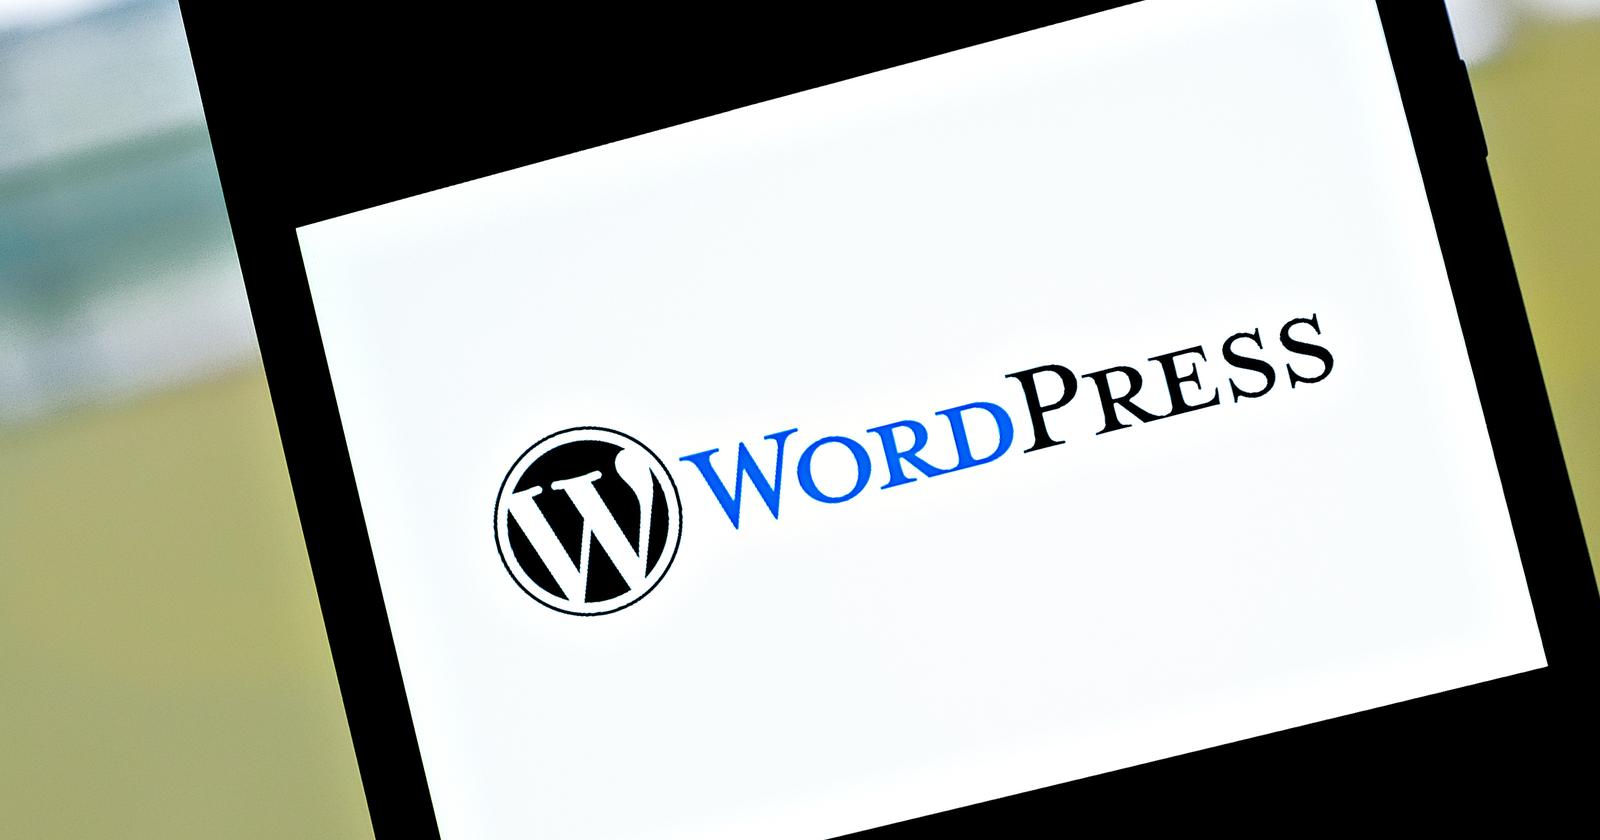 wordpress considers support internet explorer